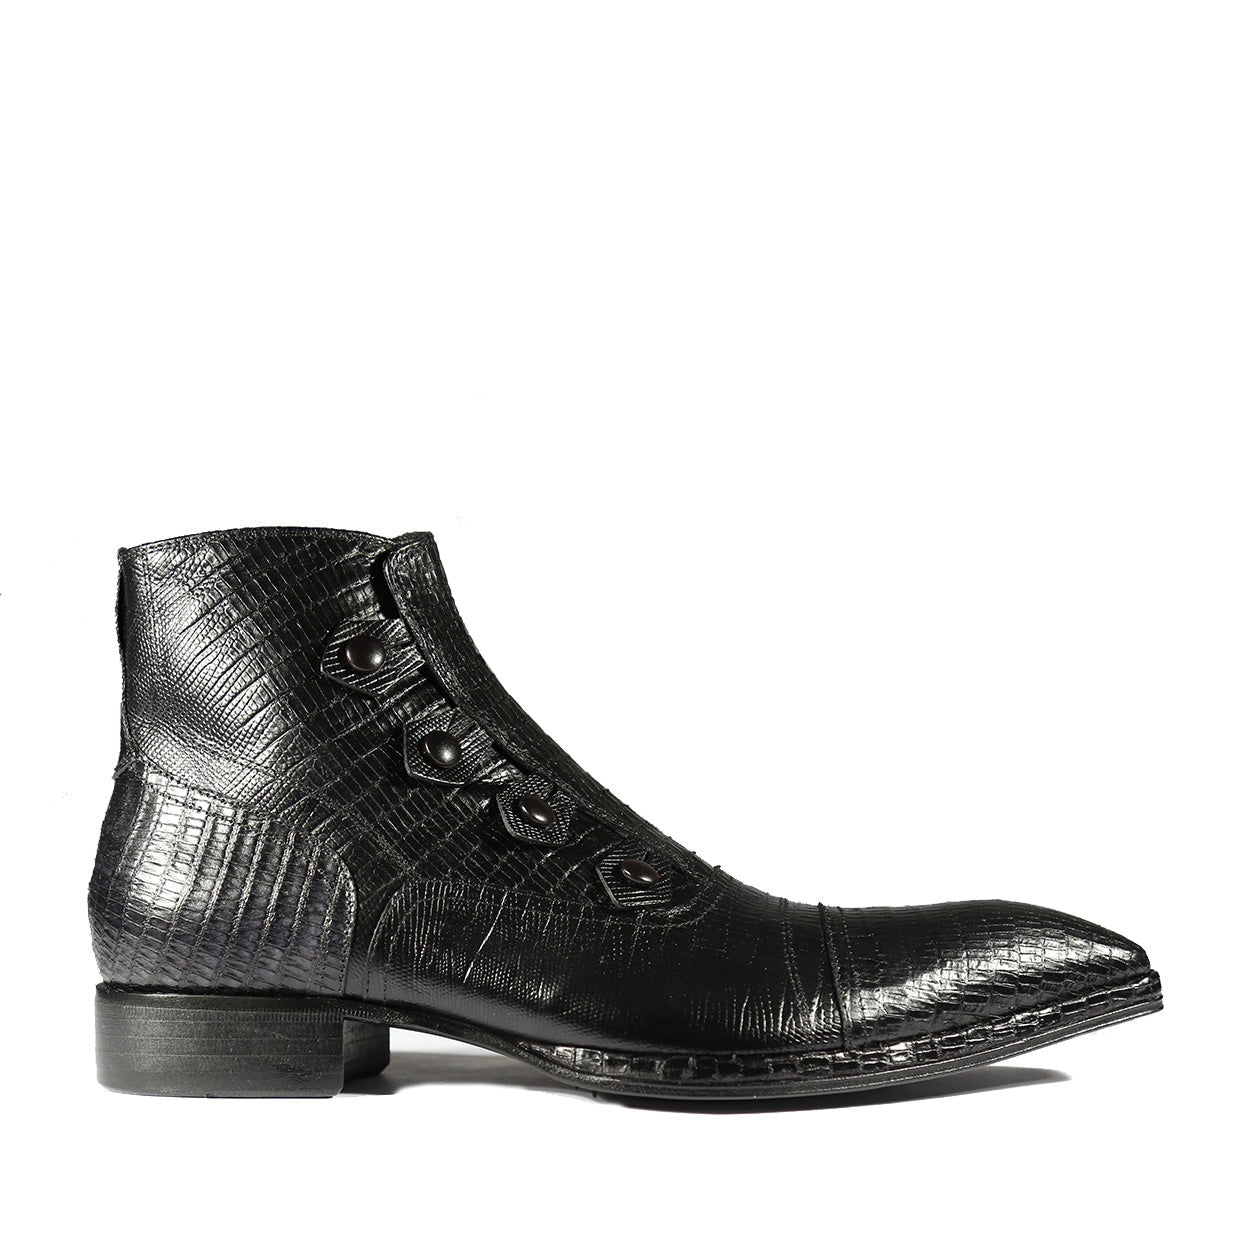 Jo Ghost 2379 Men's Shoes Black Lizard Print / Calf-Skin Leather Ankle ...